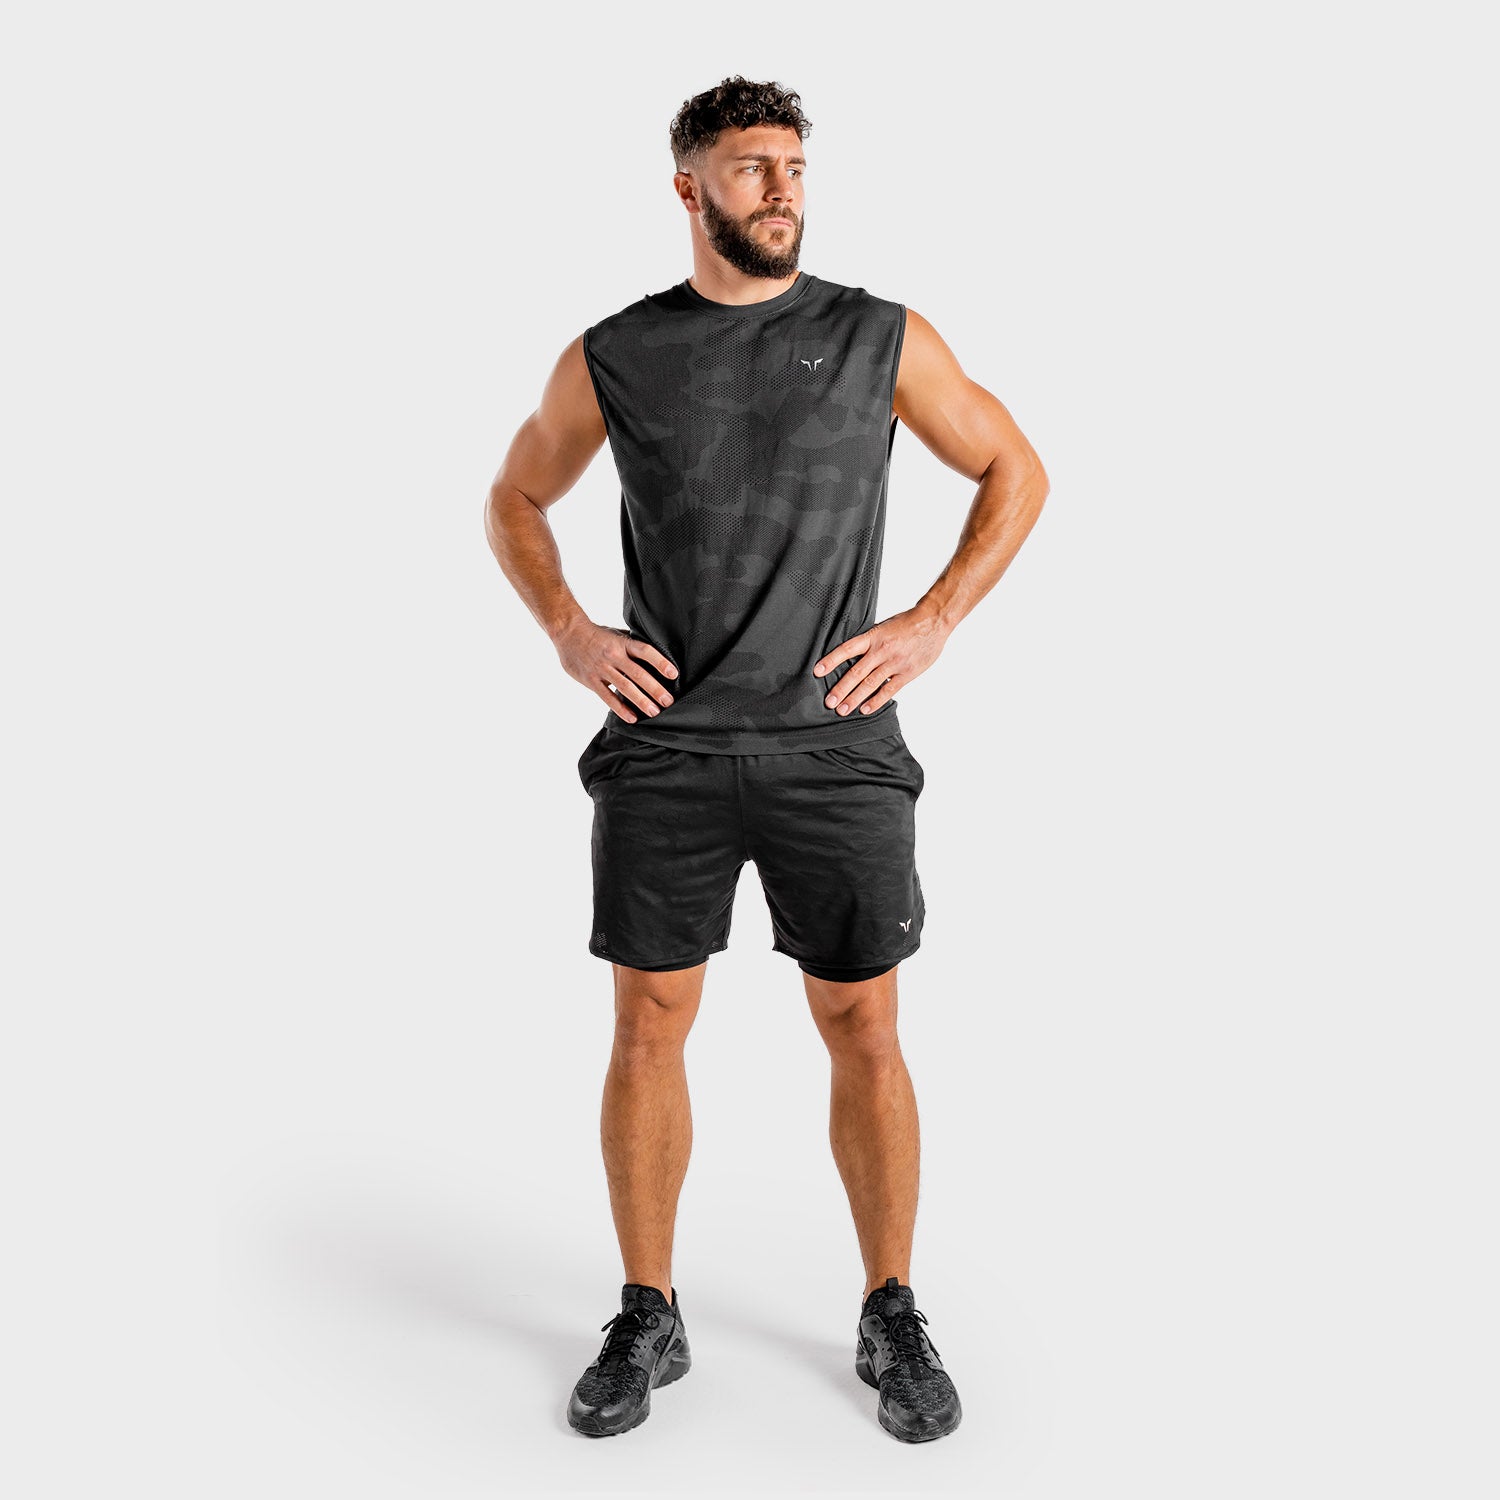 squatwolf-gym-wear-wolf-seamless-tank-black-workout-tank-tops-for-men